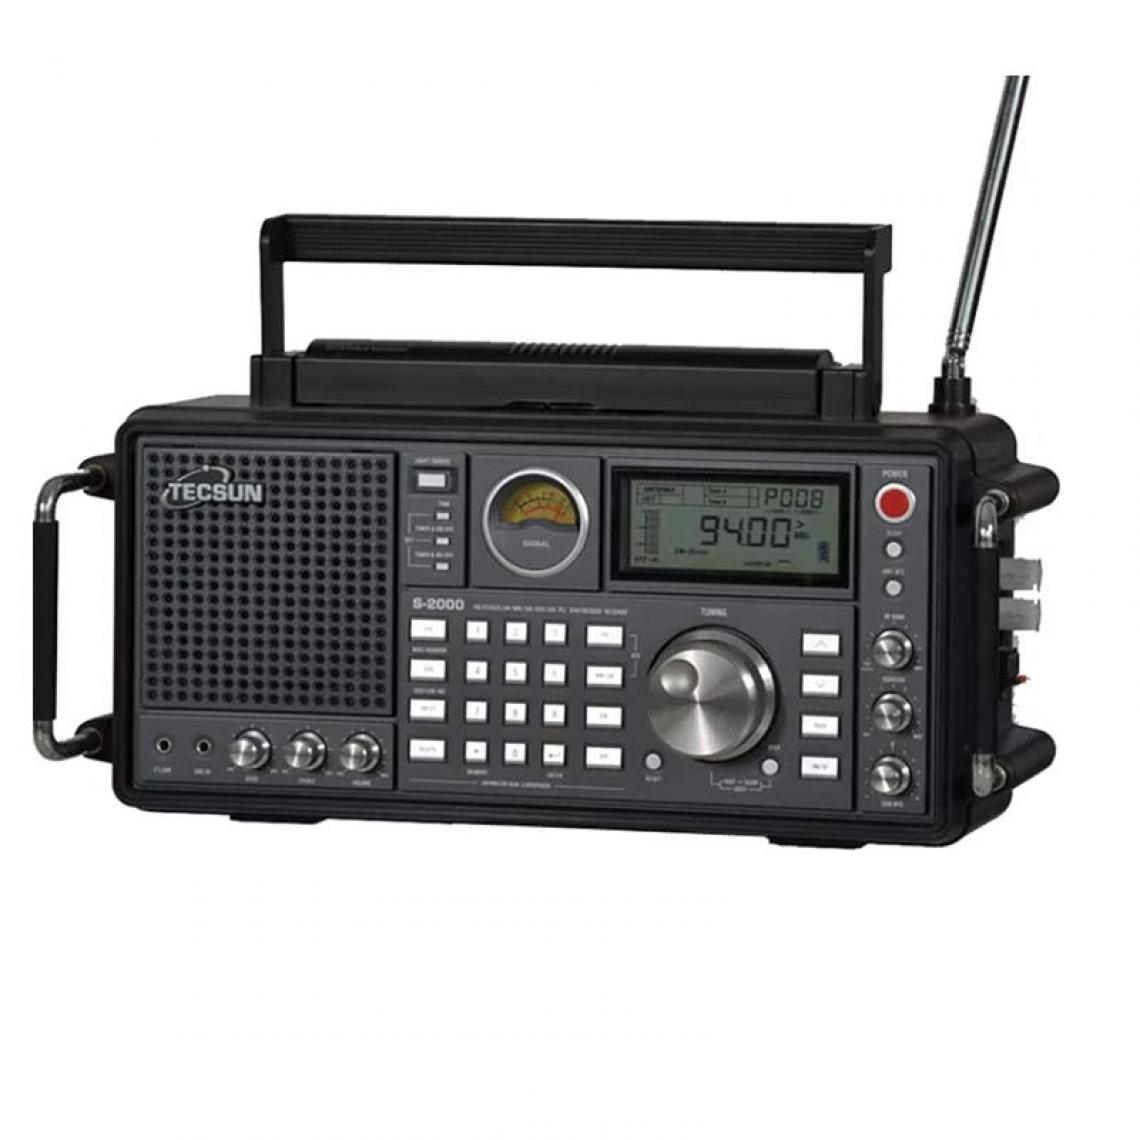 Universal - S 2000 Ham Radio Portable SSB Double Conversion PLL FM/MW/SW/LW Air Band 87 108 MHz/76 108 MHz Internet Radio | Radio Control Car Truck | Radio Control - Radio